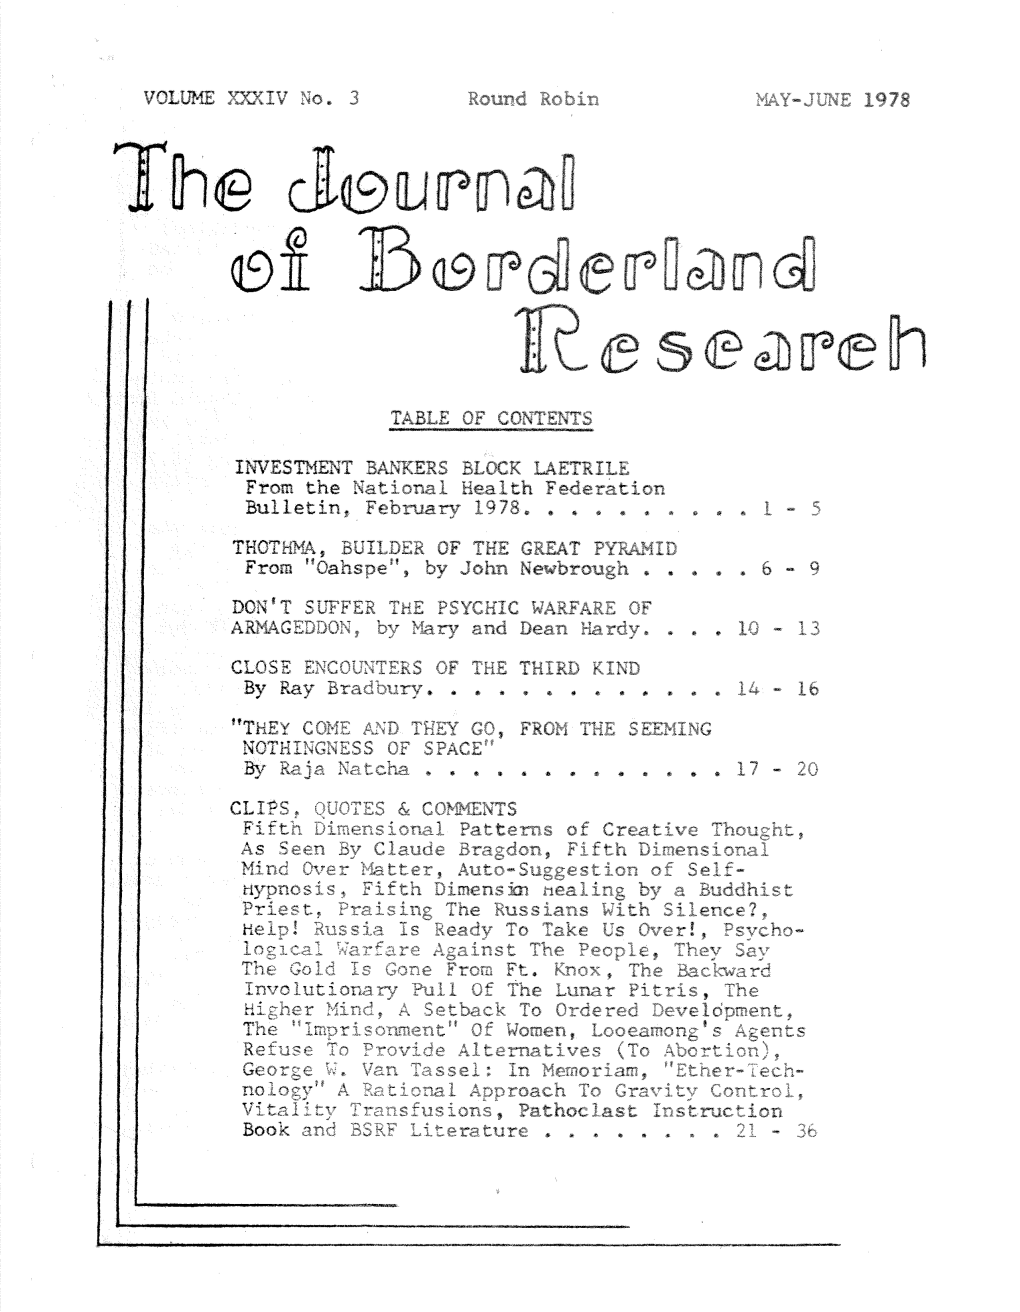 Journal of Borderland Research V34 N3 May-Jun 1978